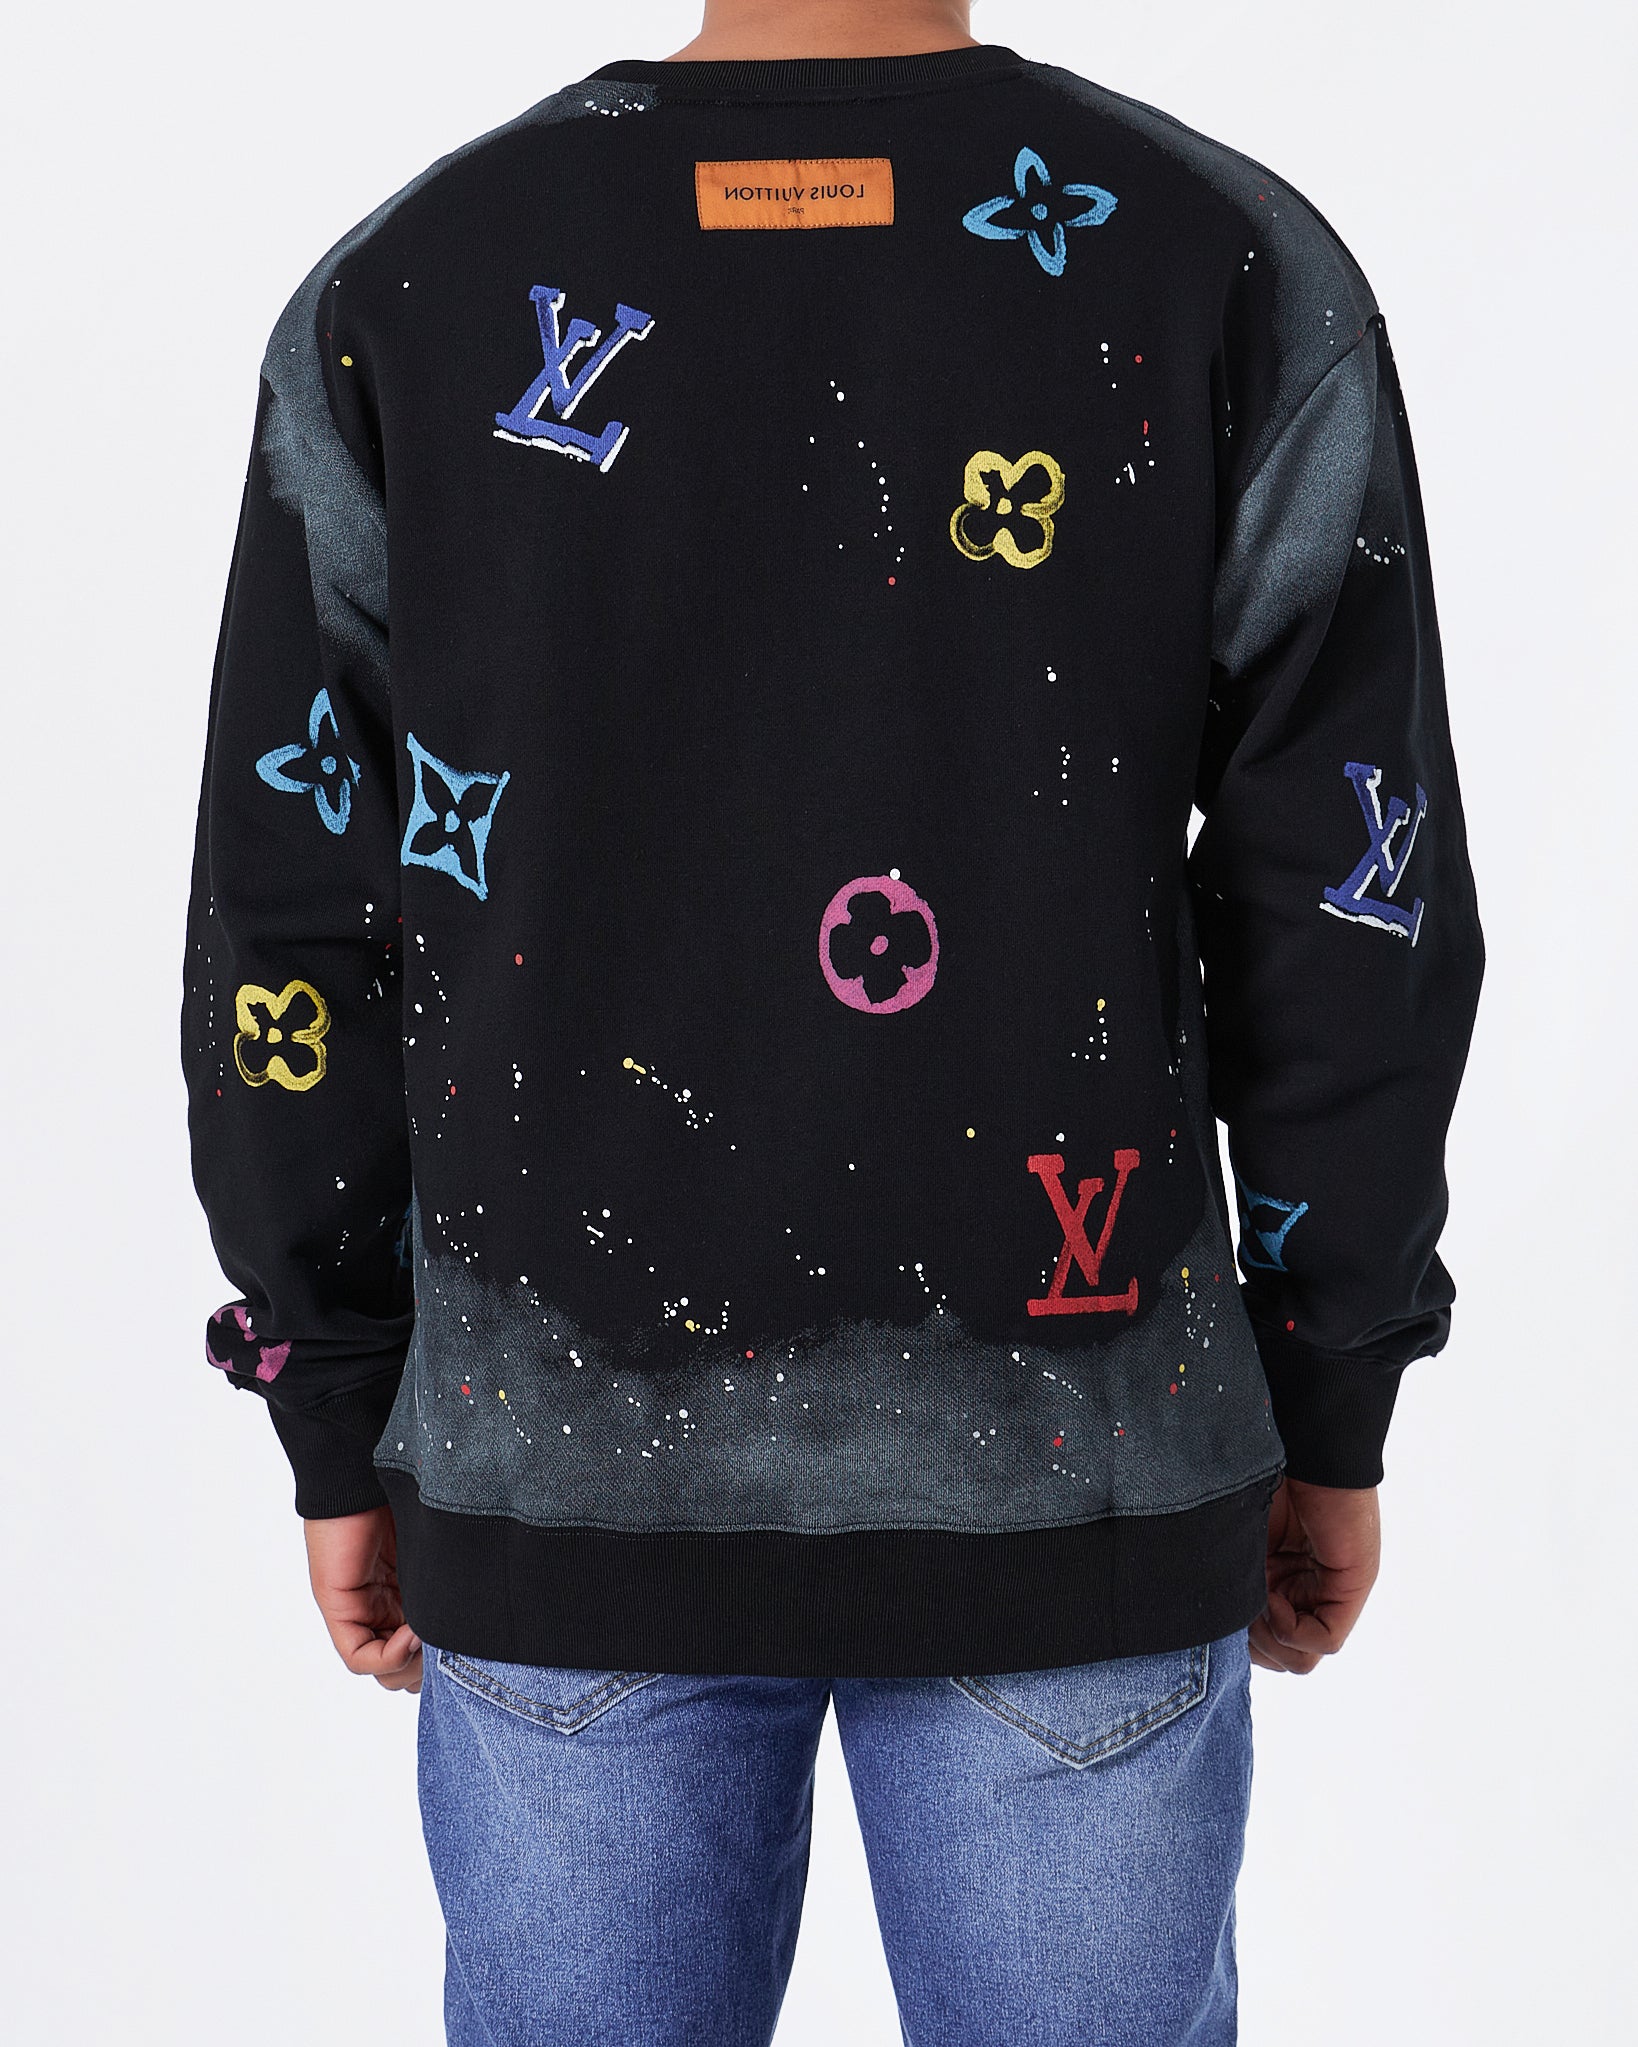 LV Color Monogram Men Black Sweater 37.90